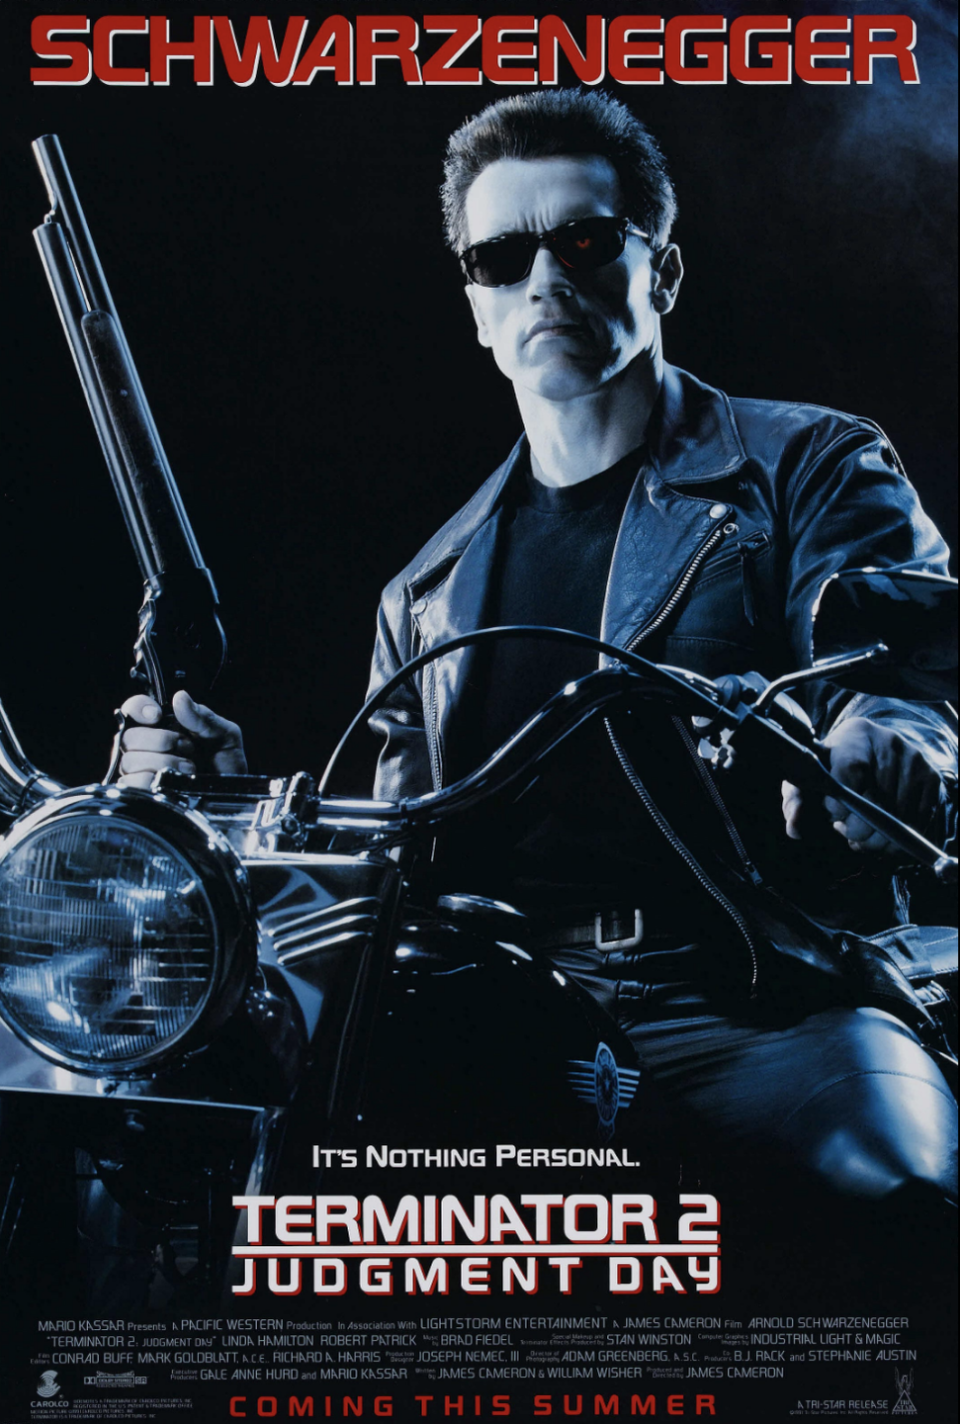 1) Terminator 2: Judgment Day (1991)